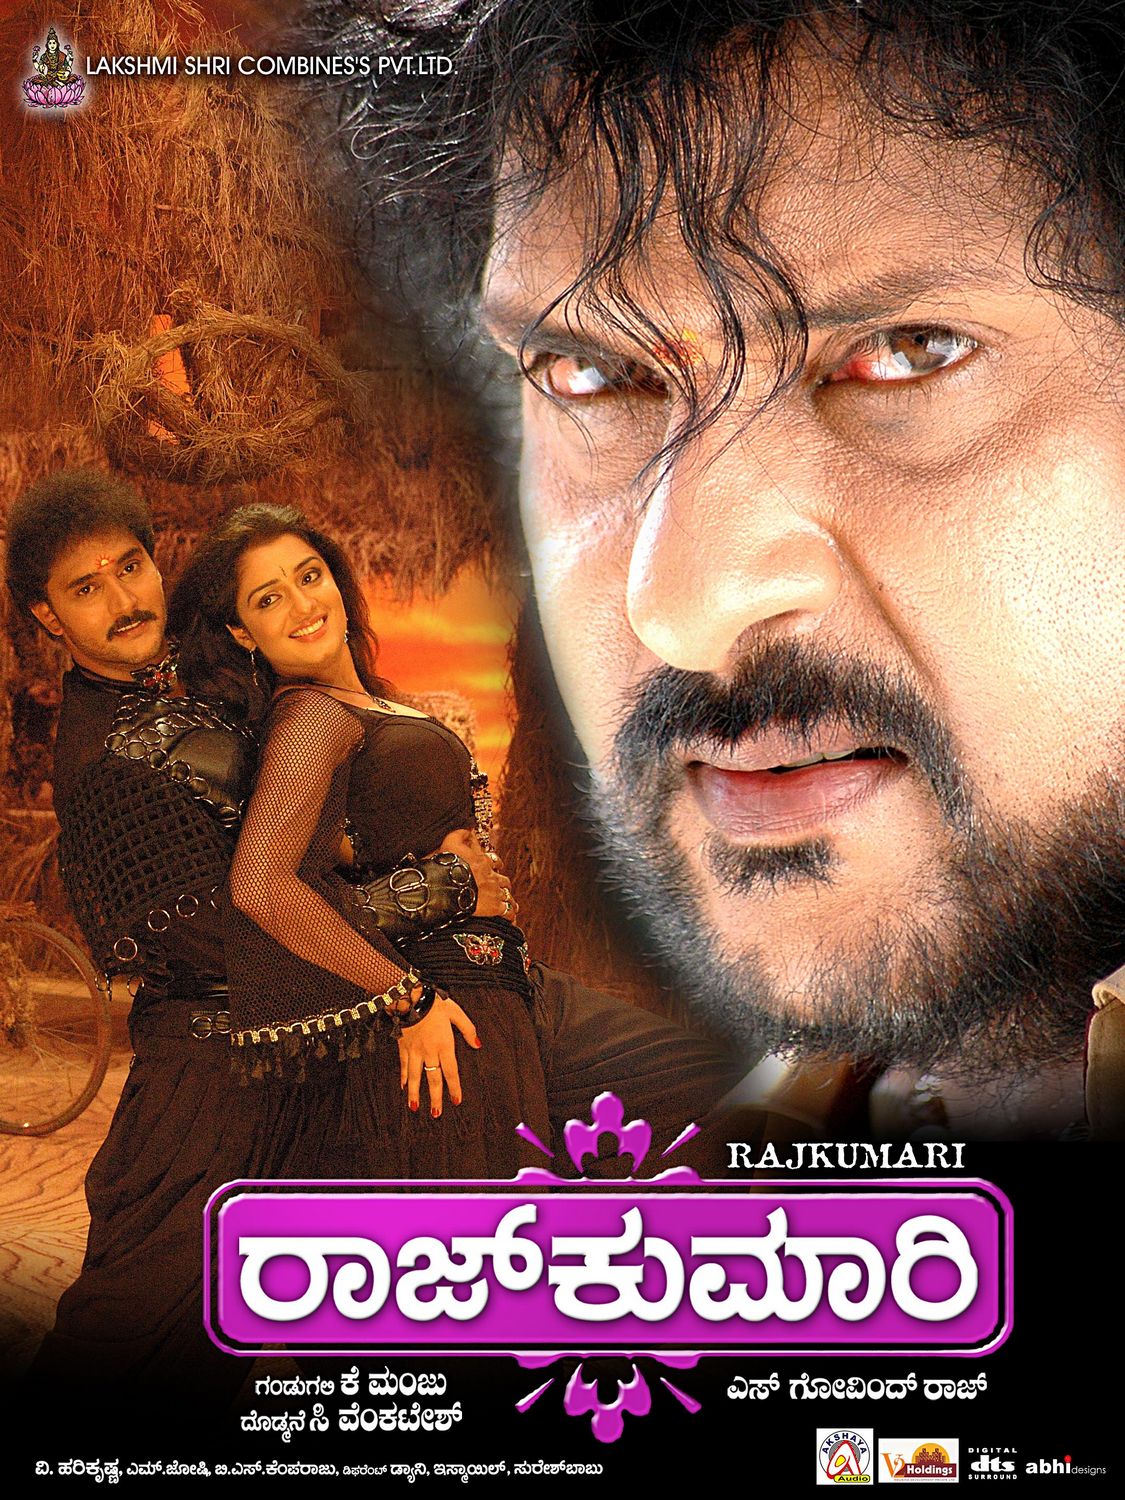 Extra Large Movie Poster Image for Rajkumari (#14 of 20)